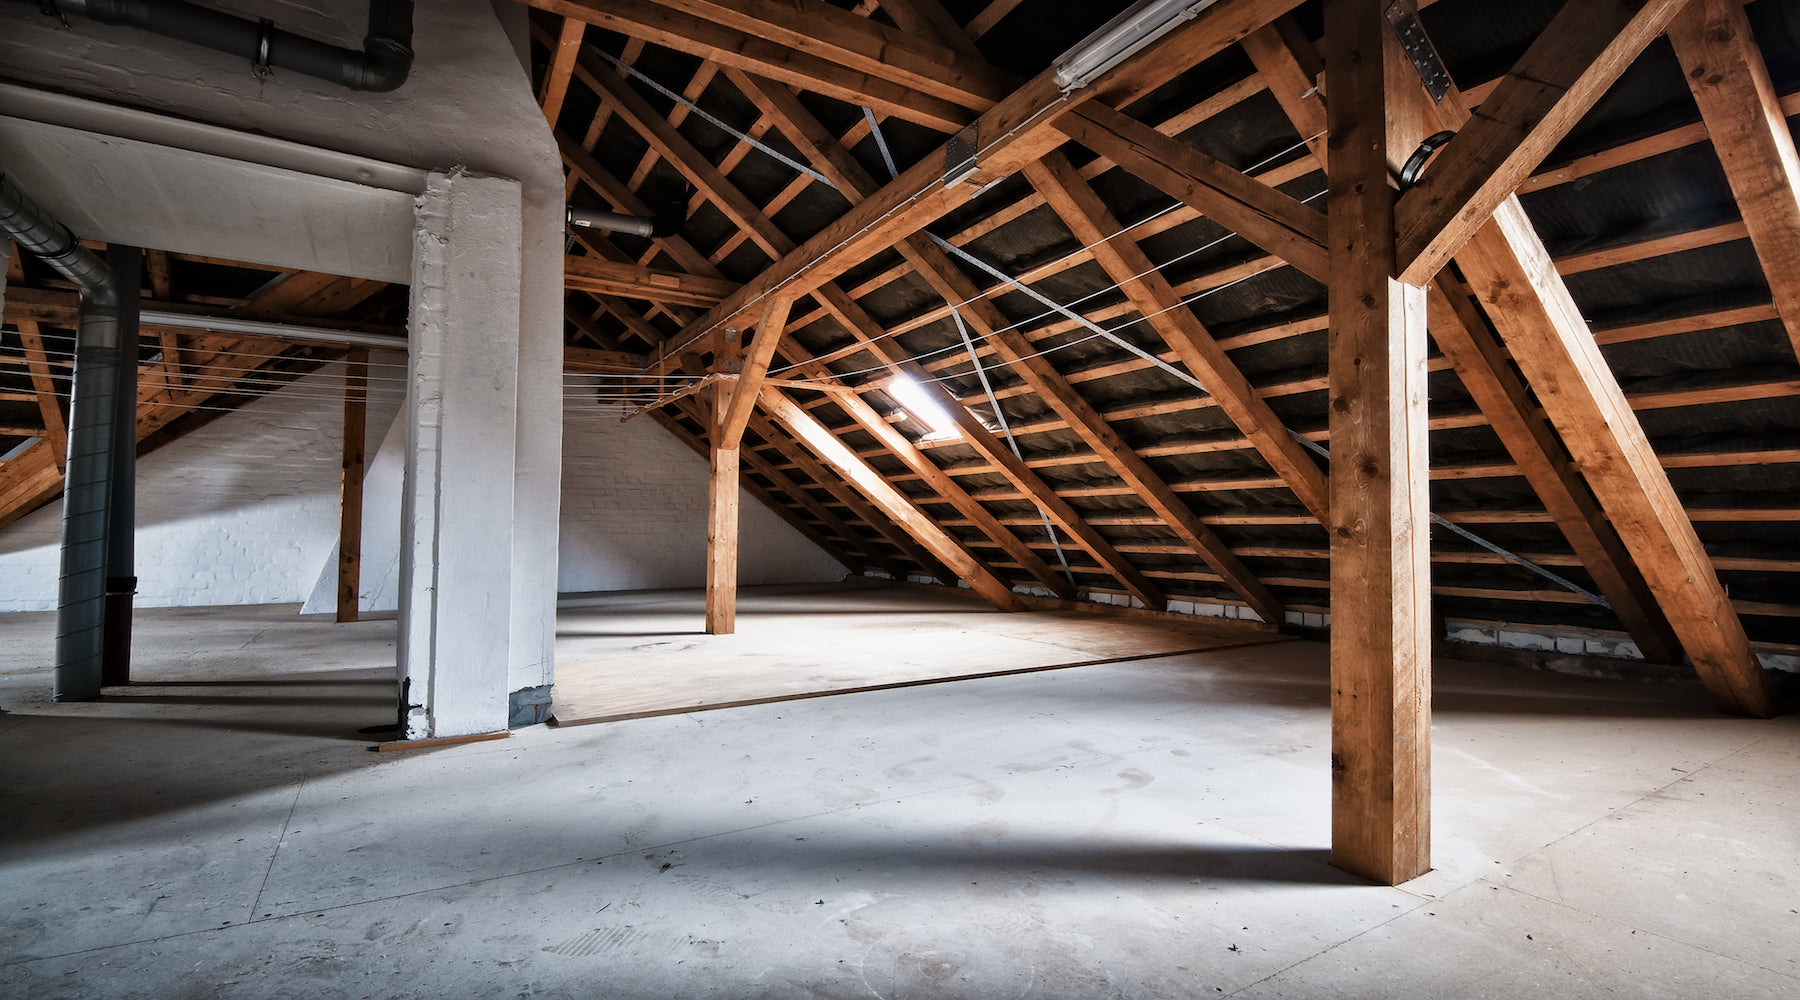 Attic lighting installed in empty house attic